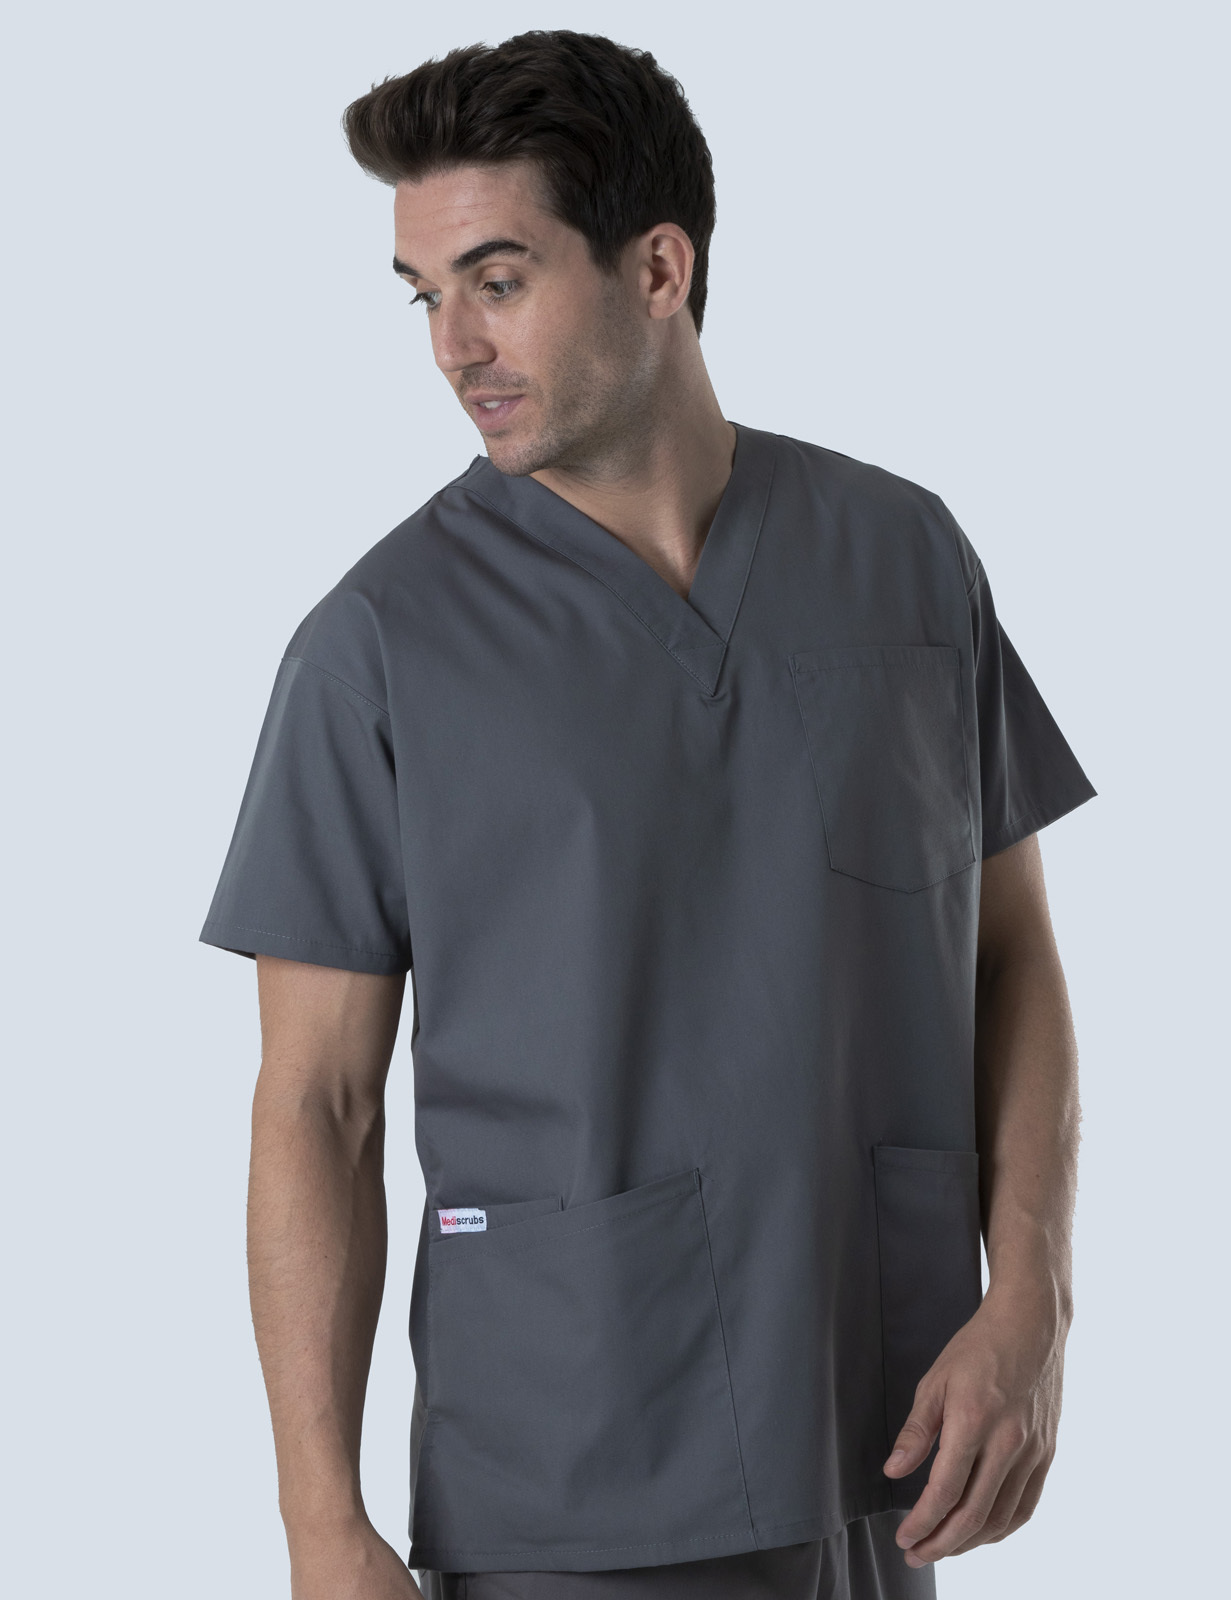 I-Med Radiology - Radiographer (4 Pocket Solid Scrub Top in Steel Grey incl Logos)